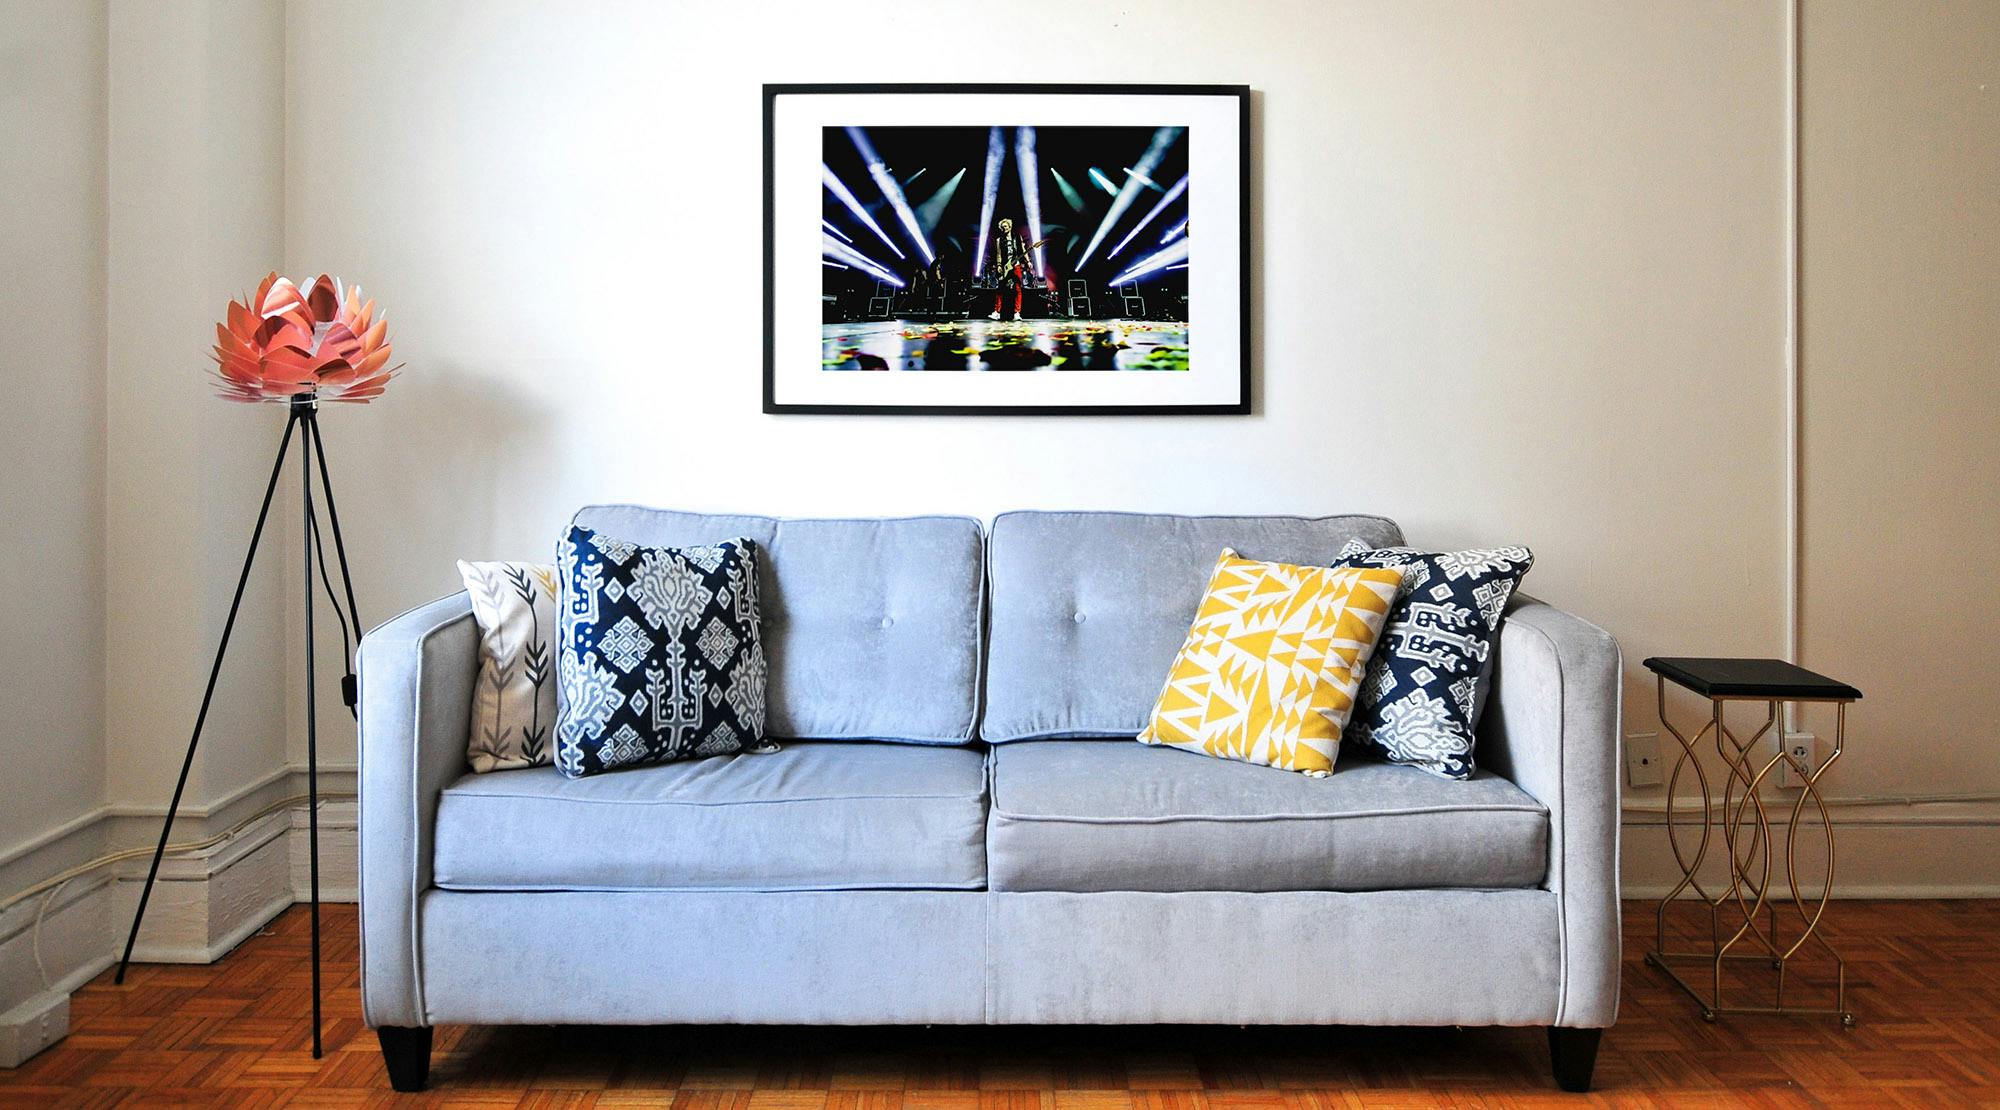 Livingroom photo by Naomi Hebert on Unsplash